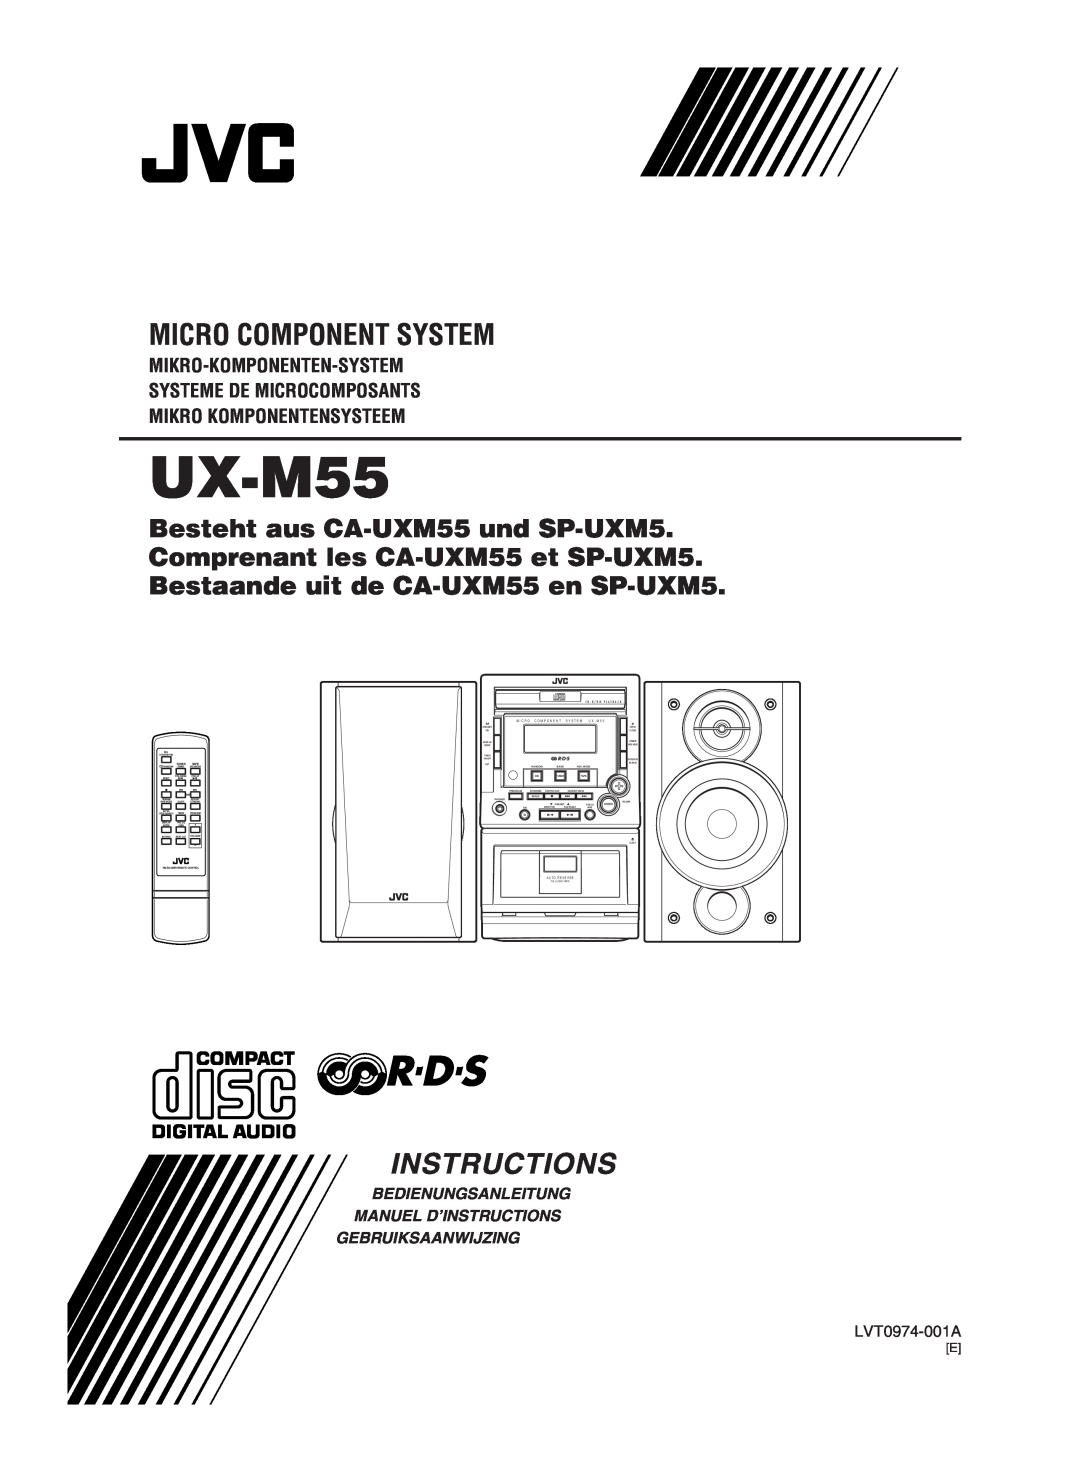 JVC UX-M55 manual Micro Component System, Instructions, Mikro-Komponenten-System, Systeme De Microcomposants, LVT0974-001A 